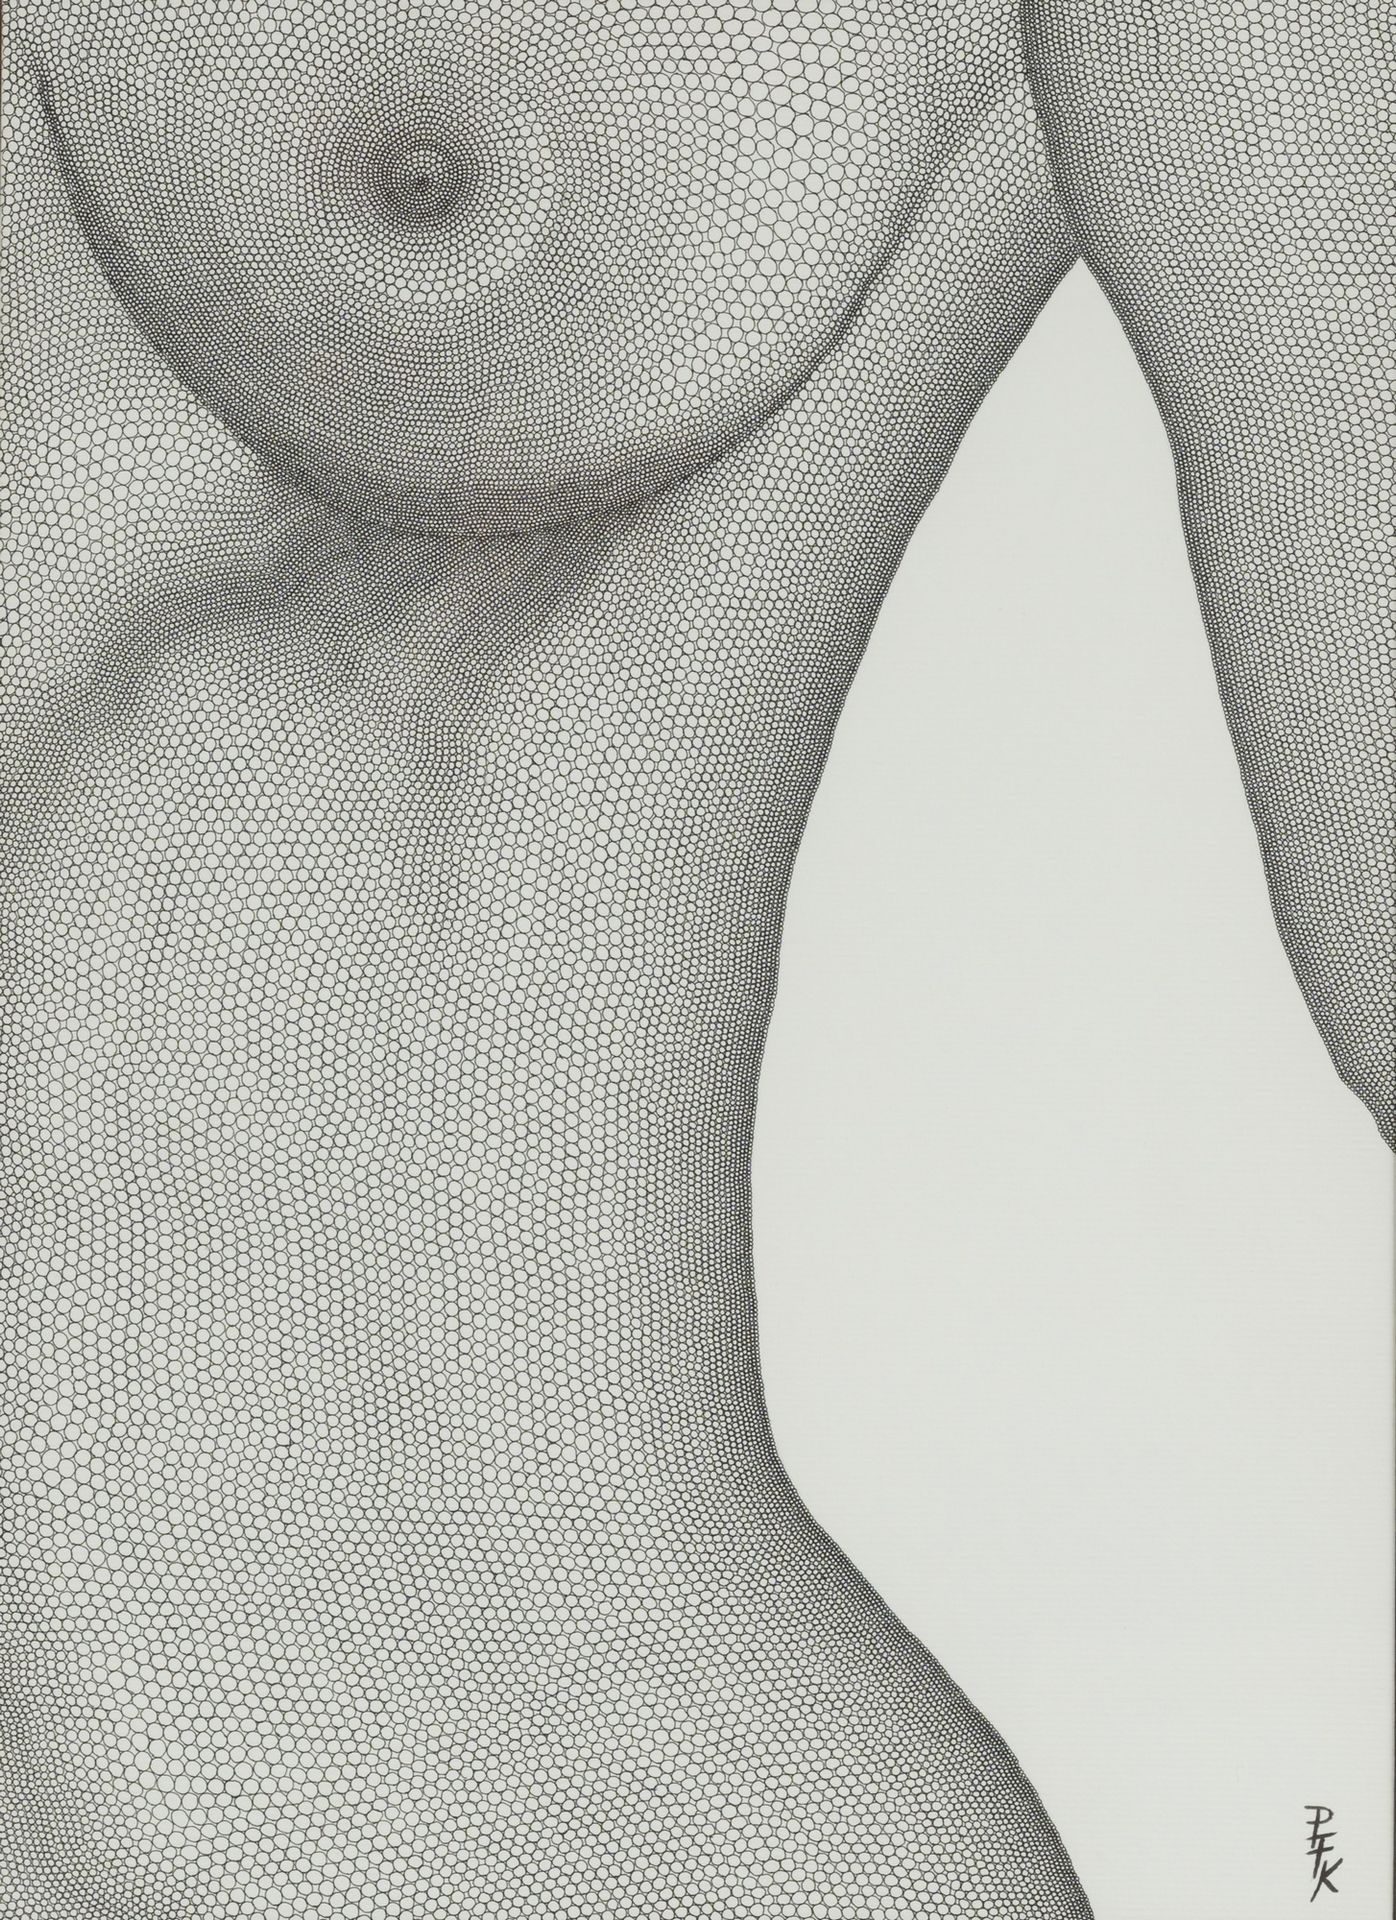 Null Philippe FAUCHET-KAWAMURA, Sous mon sein, 2019, 41 x51 cm